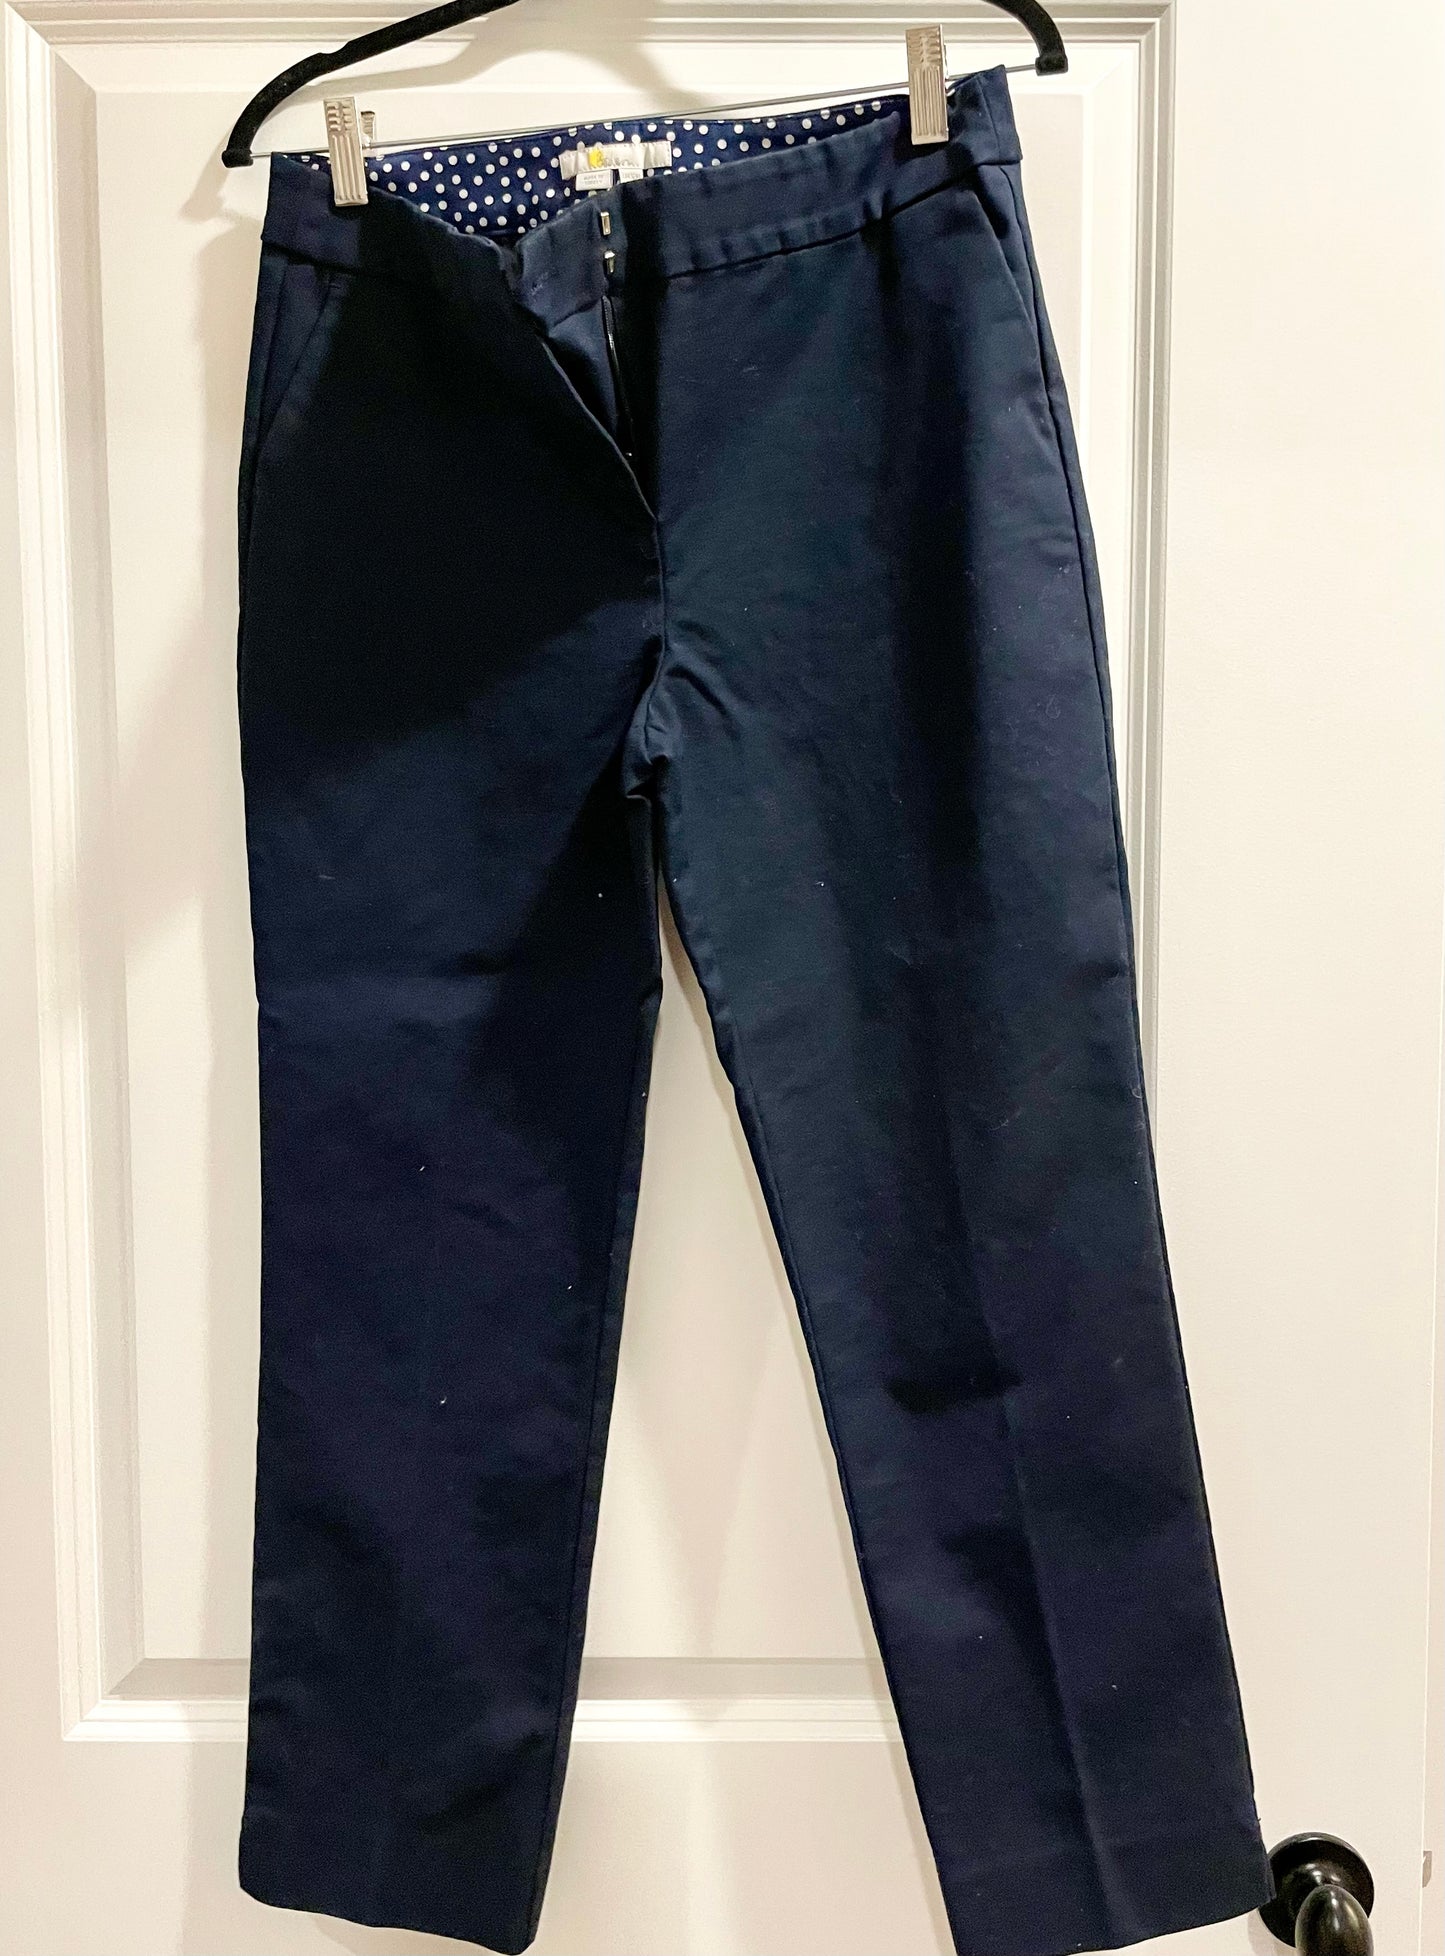 Navy BODEN dress pants size 8